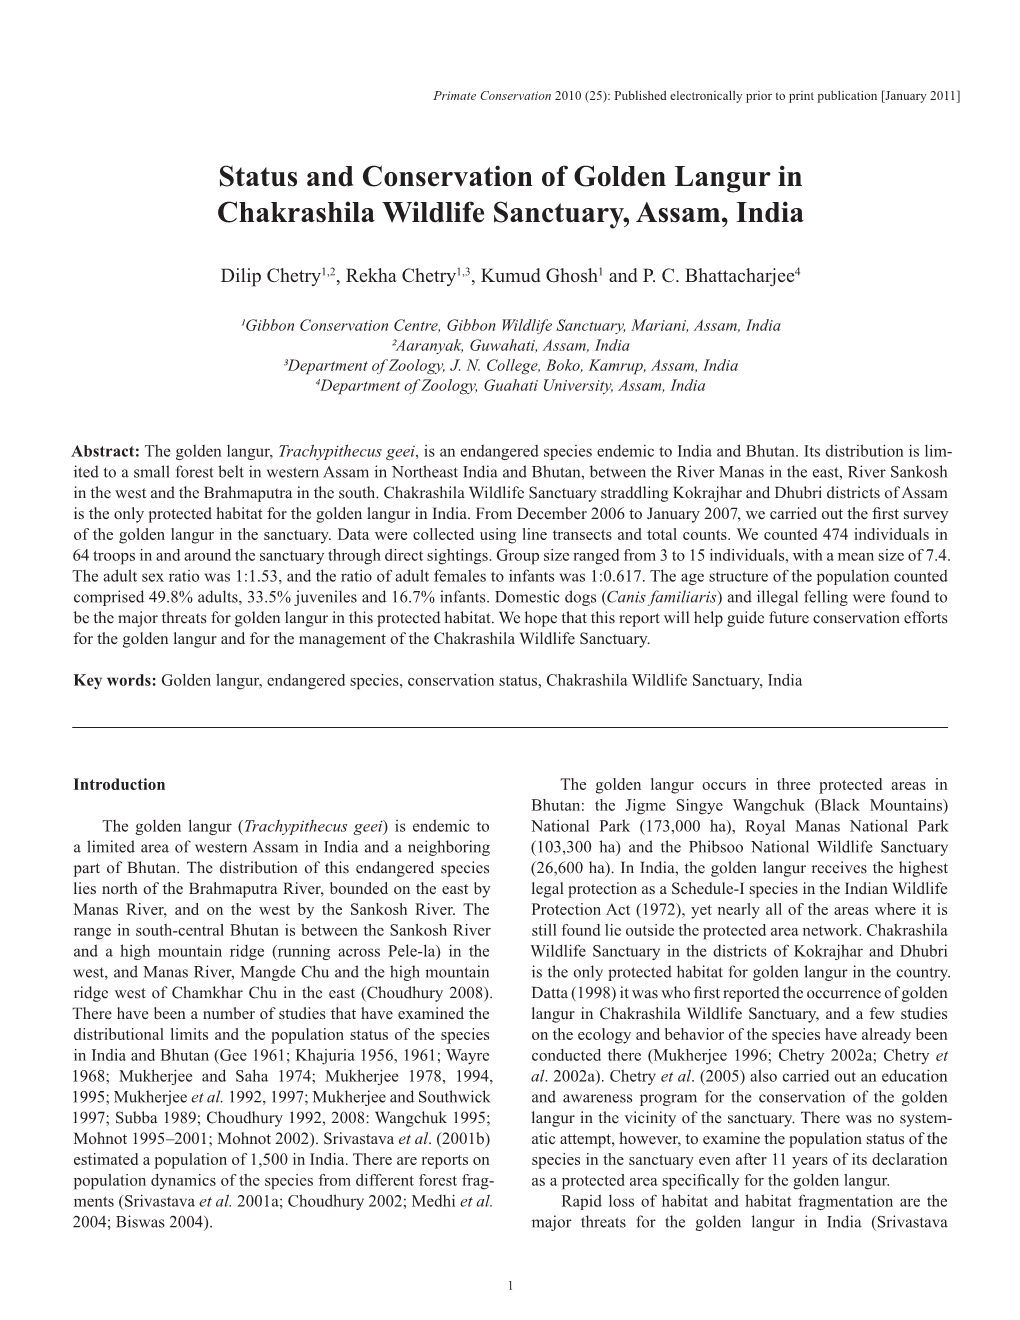 Status and Conservation of Golden Langur in Chakrashila Wildlife Sanctuary, Assam, India